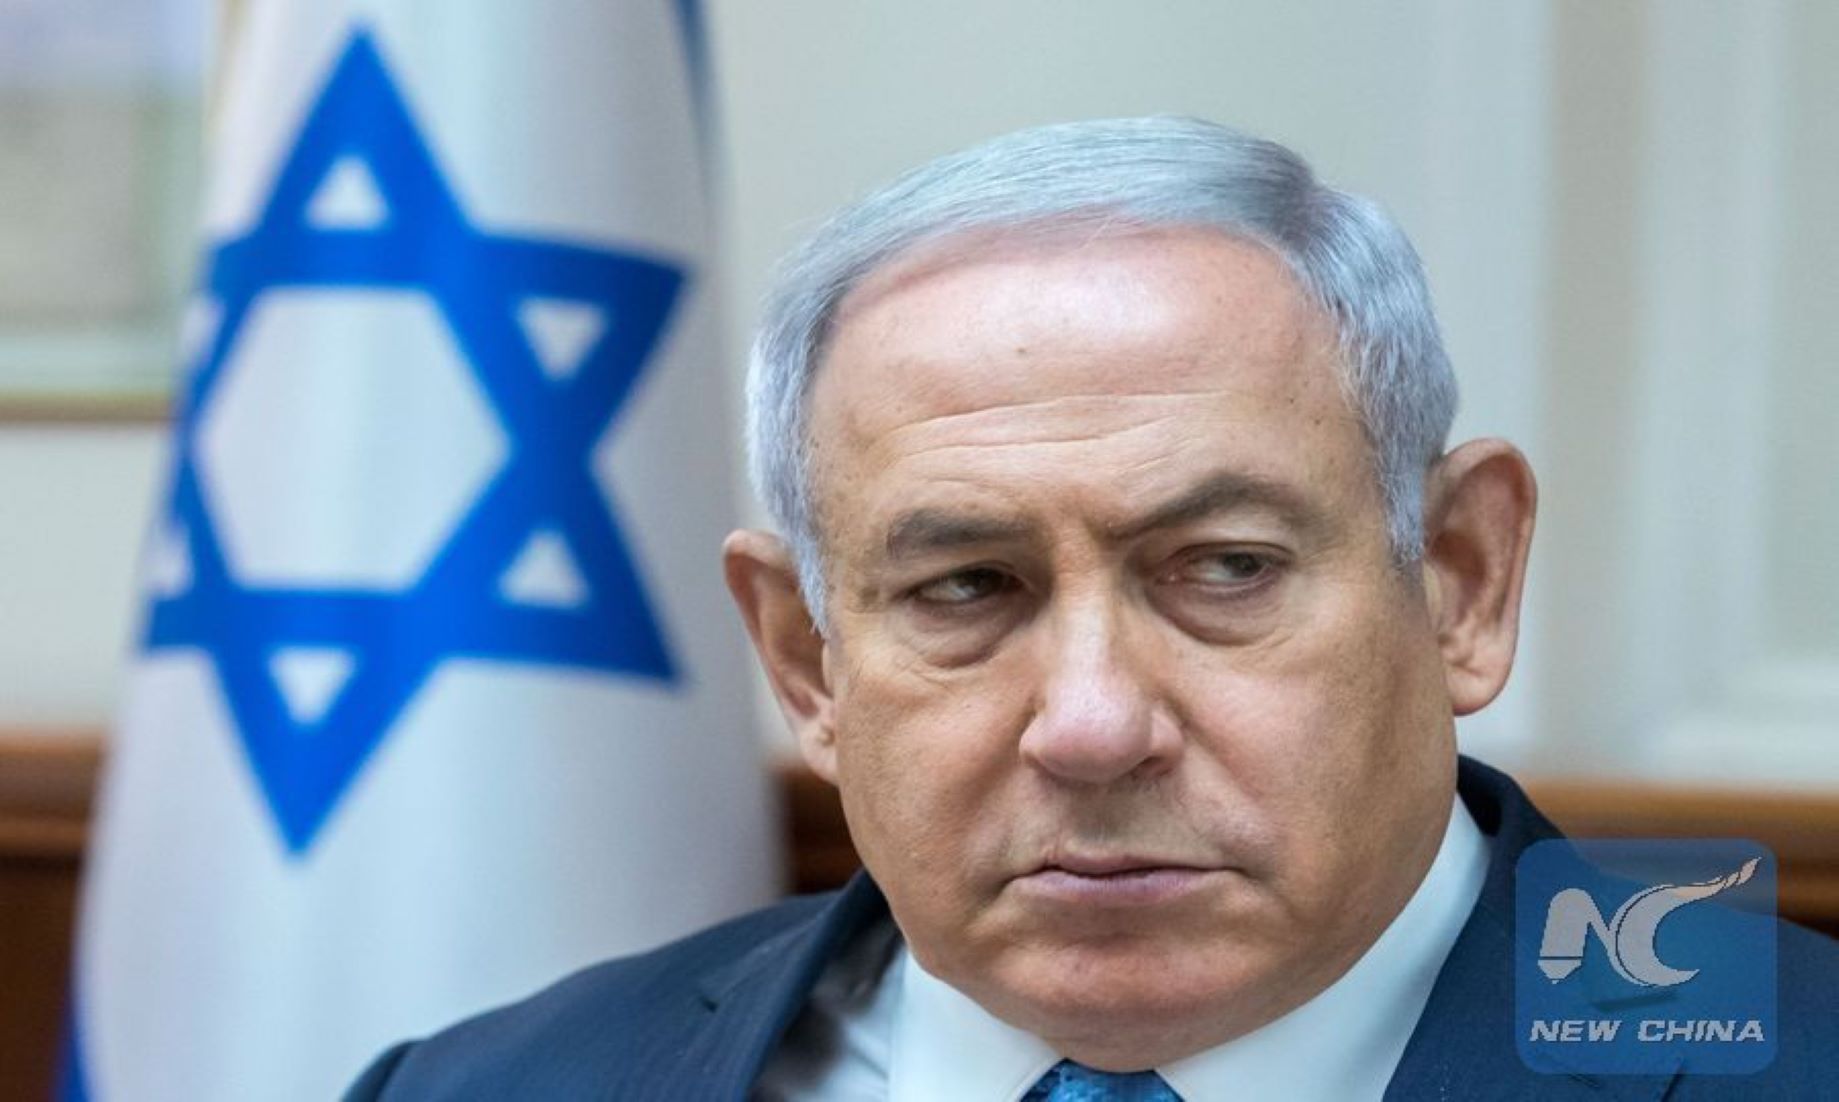 News Analysis: Israel’s Netanyahu Faces Pressures On Verge Of Returning To Power